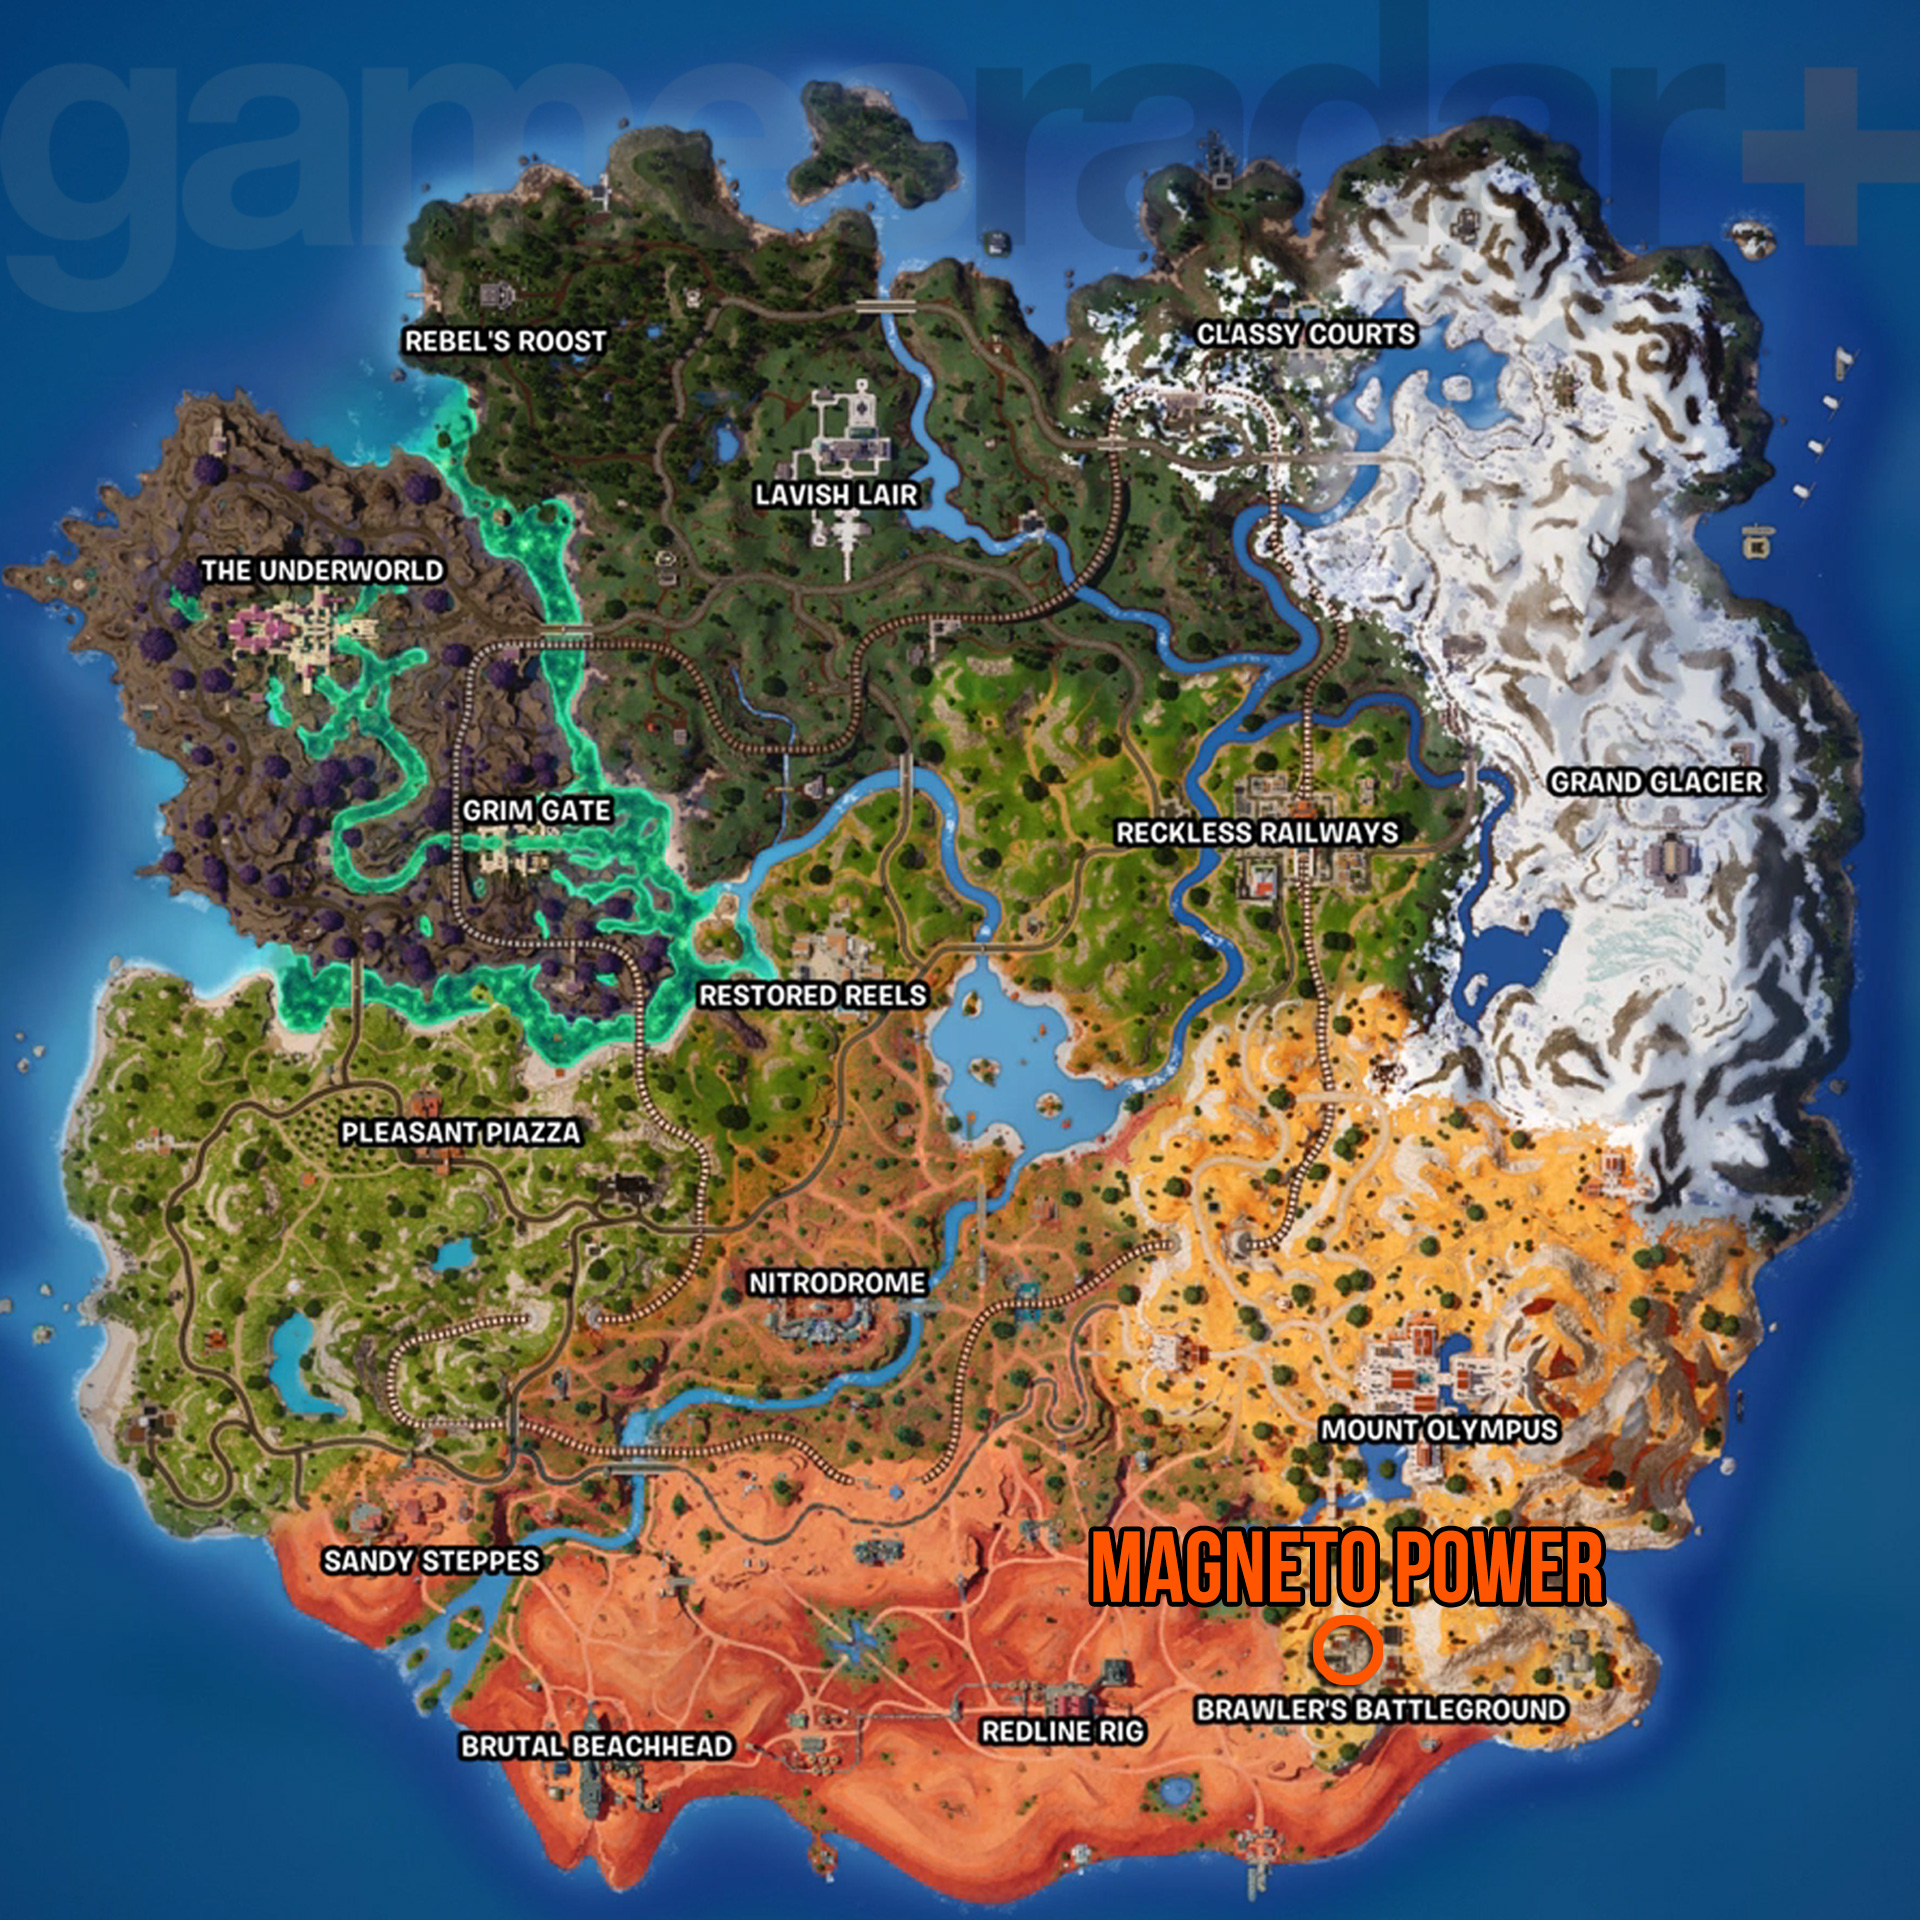 Fortnite Magneto Power location map